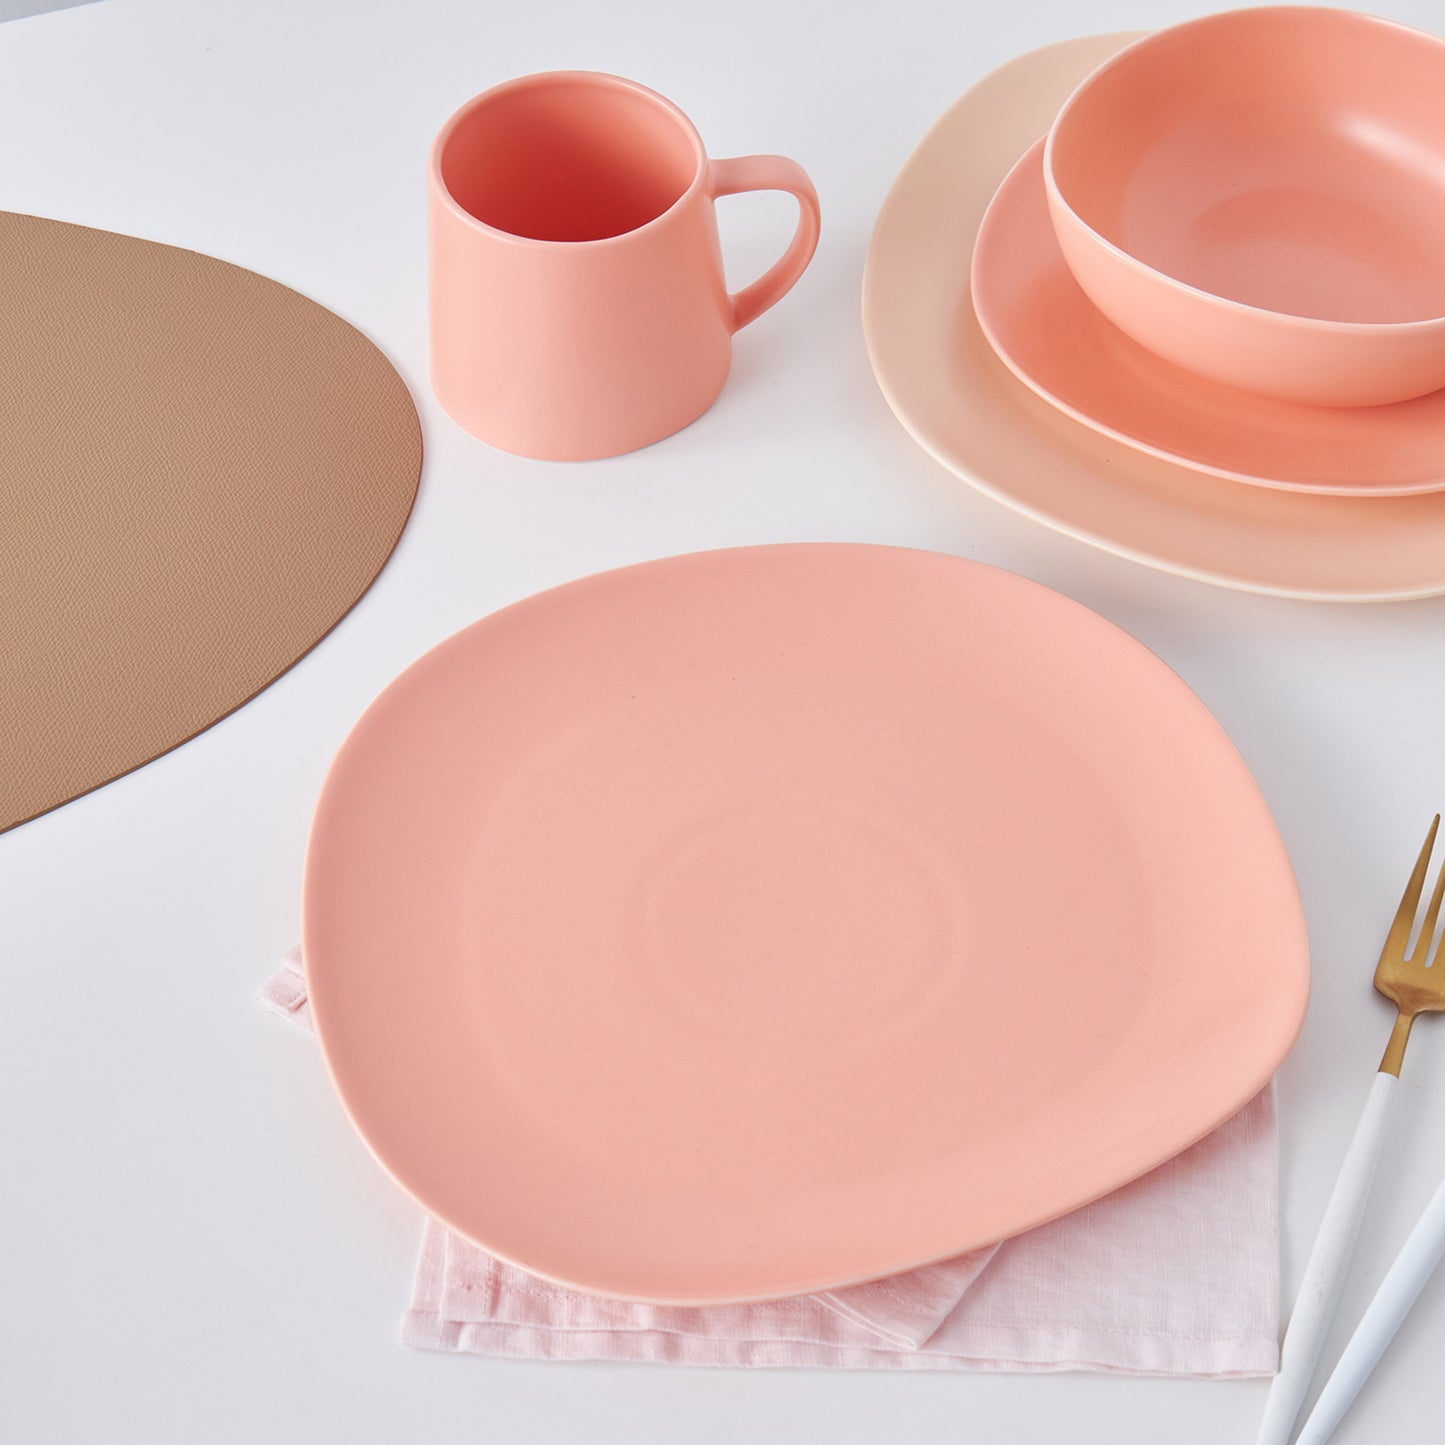 Delilah Porcelain Dinner Plate Set - Set of 6